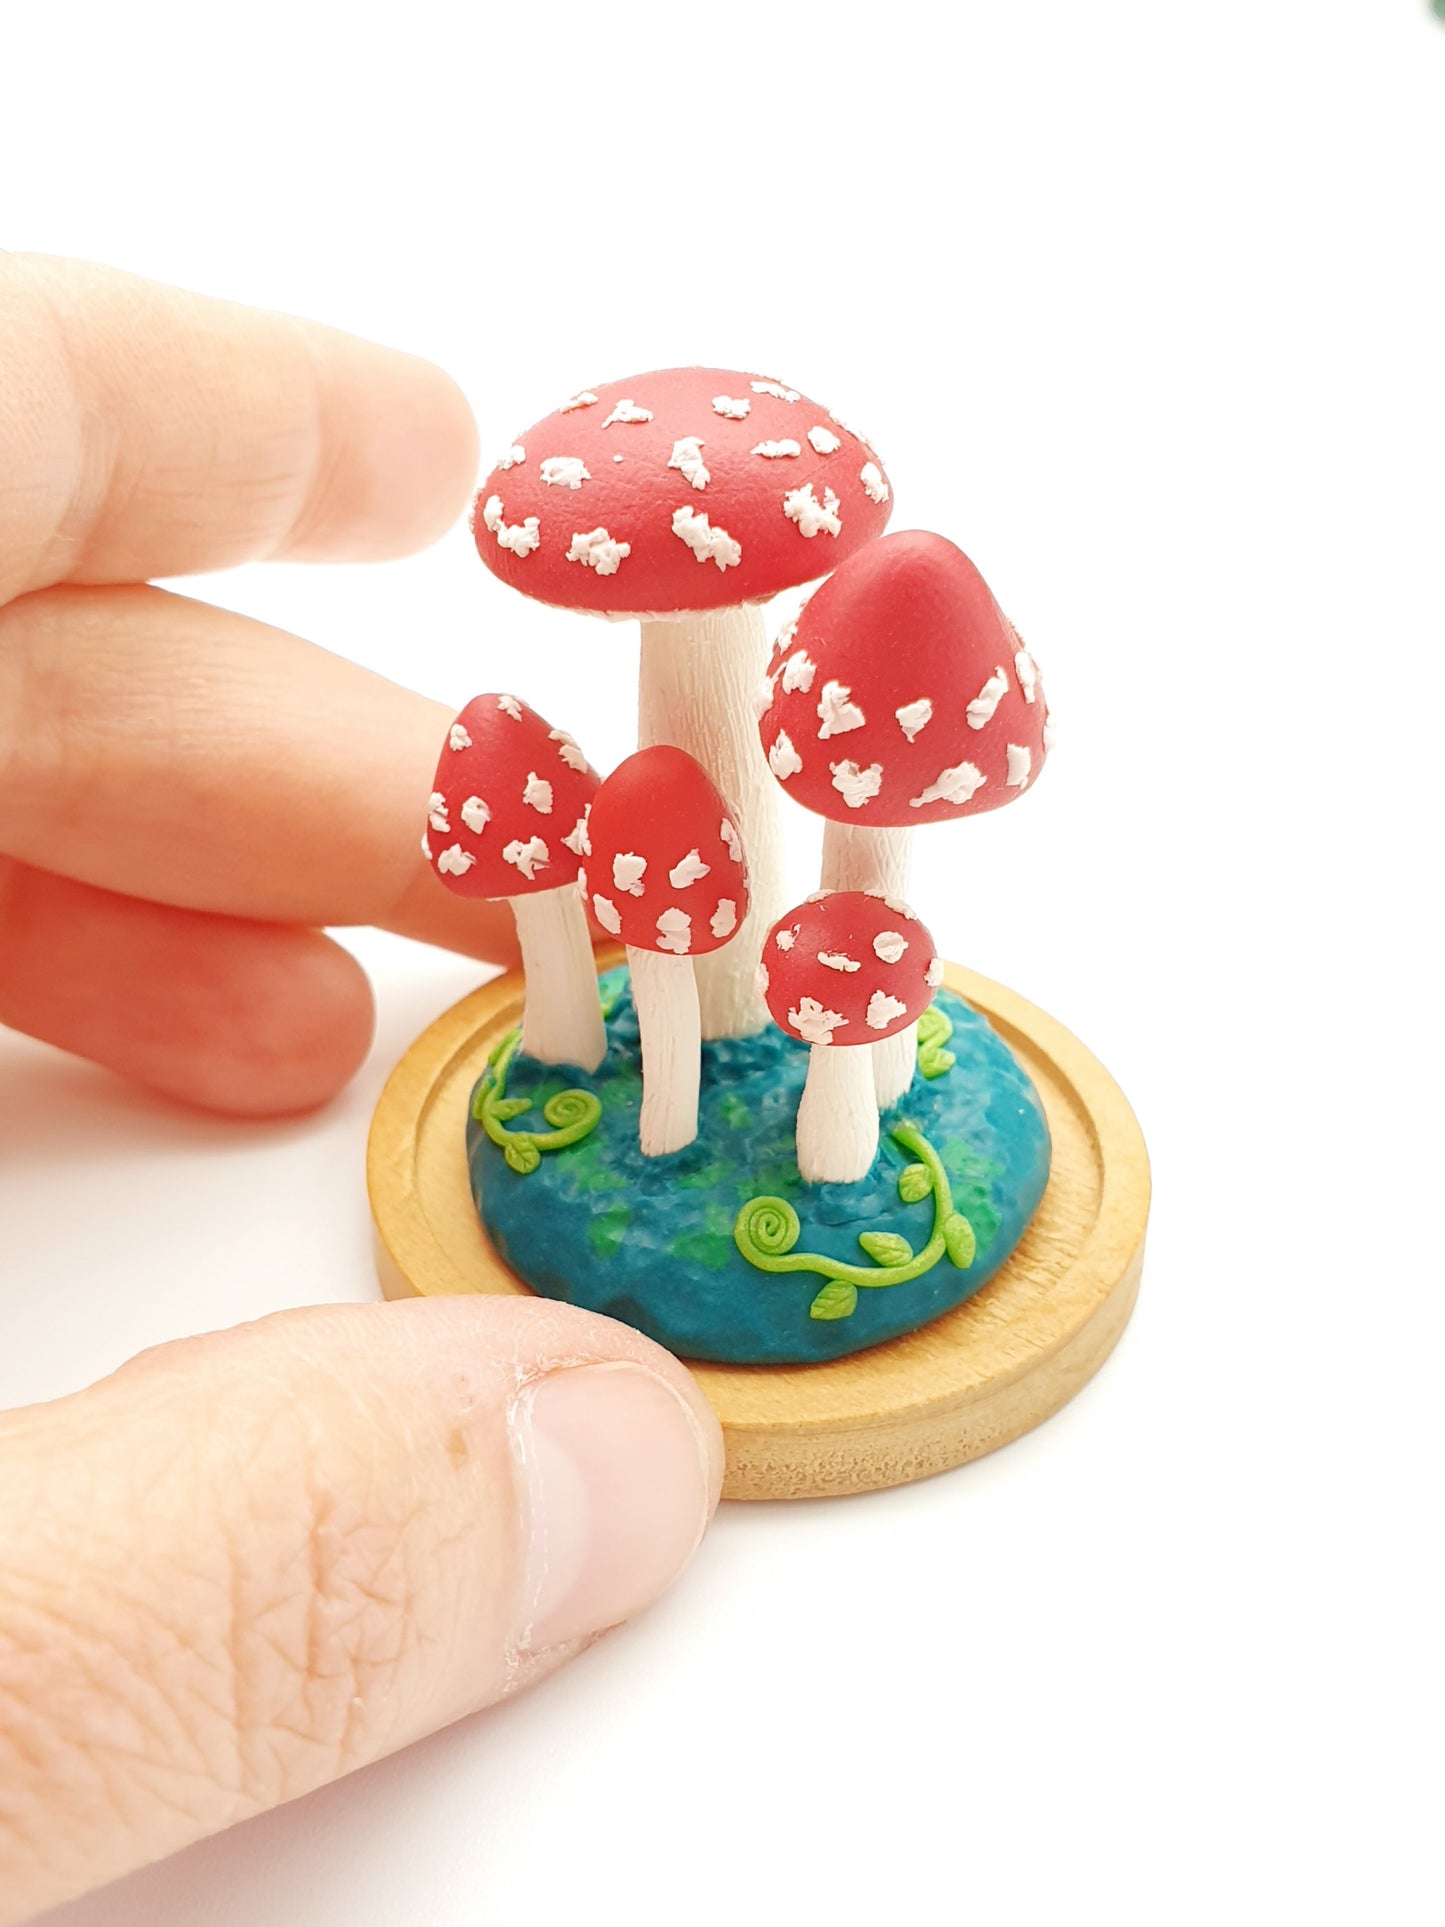 Miniature amanita mushroom sculpture in glass cover